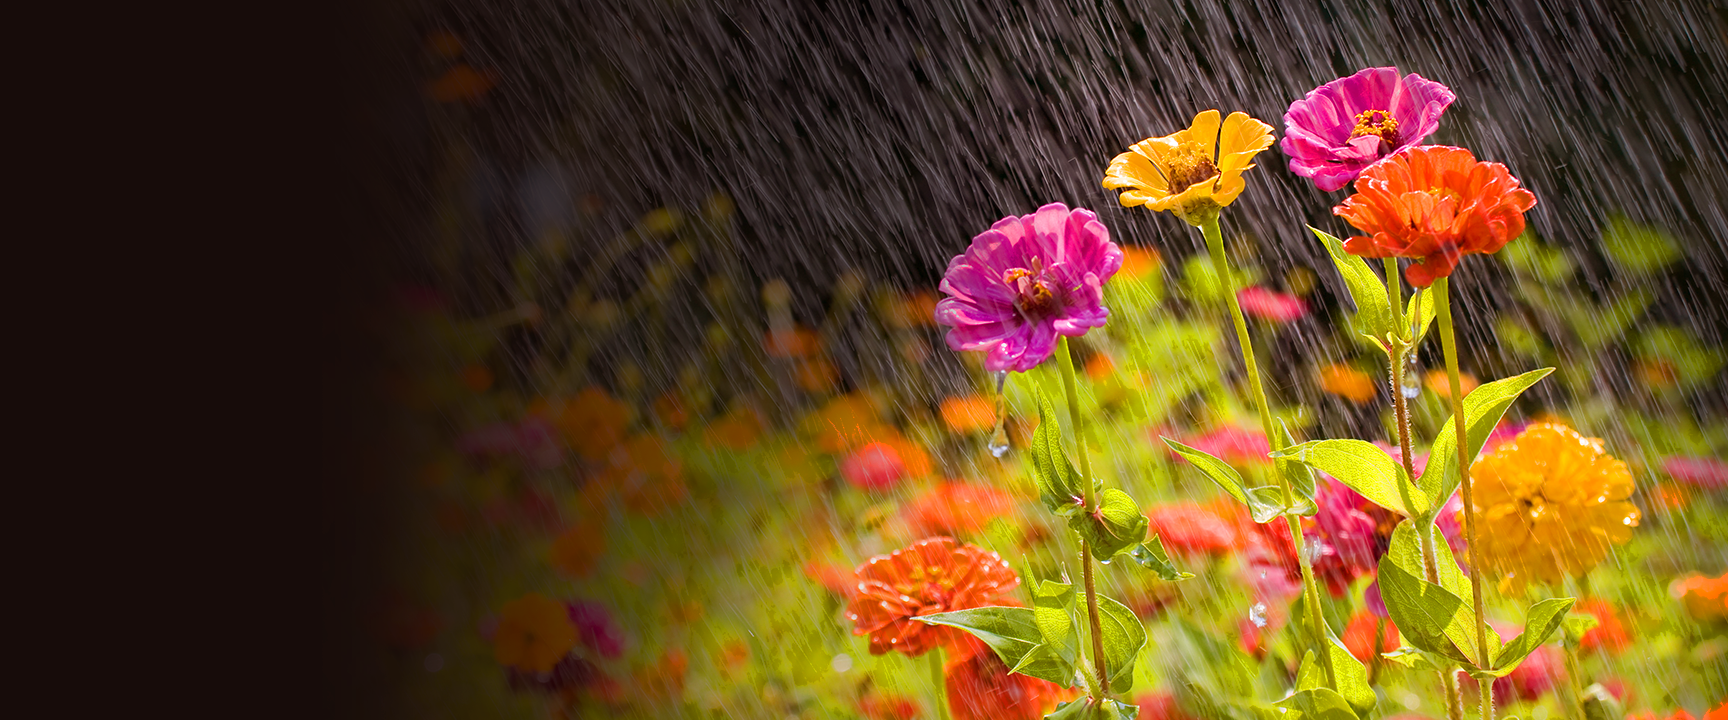 Rain cascading on garden flowers.